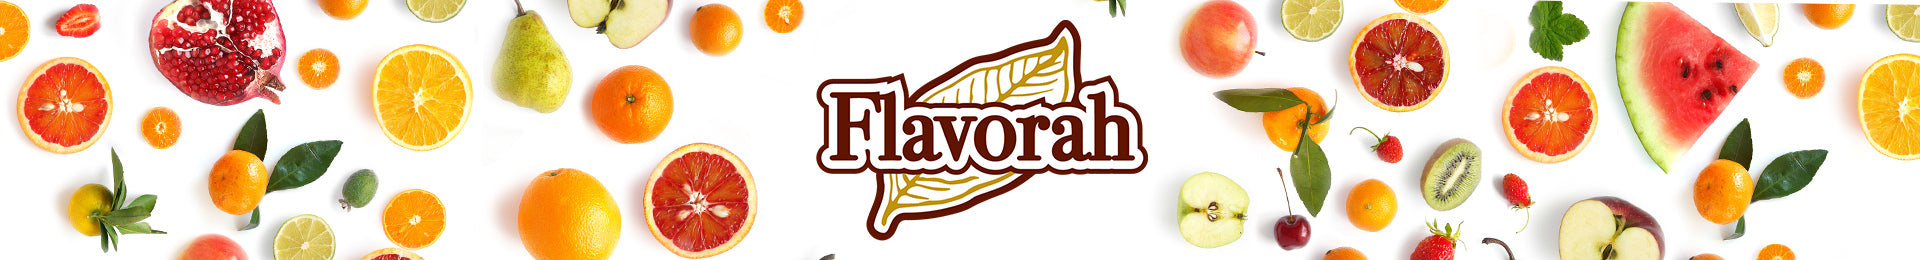 flavorah